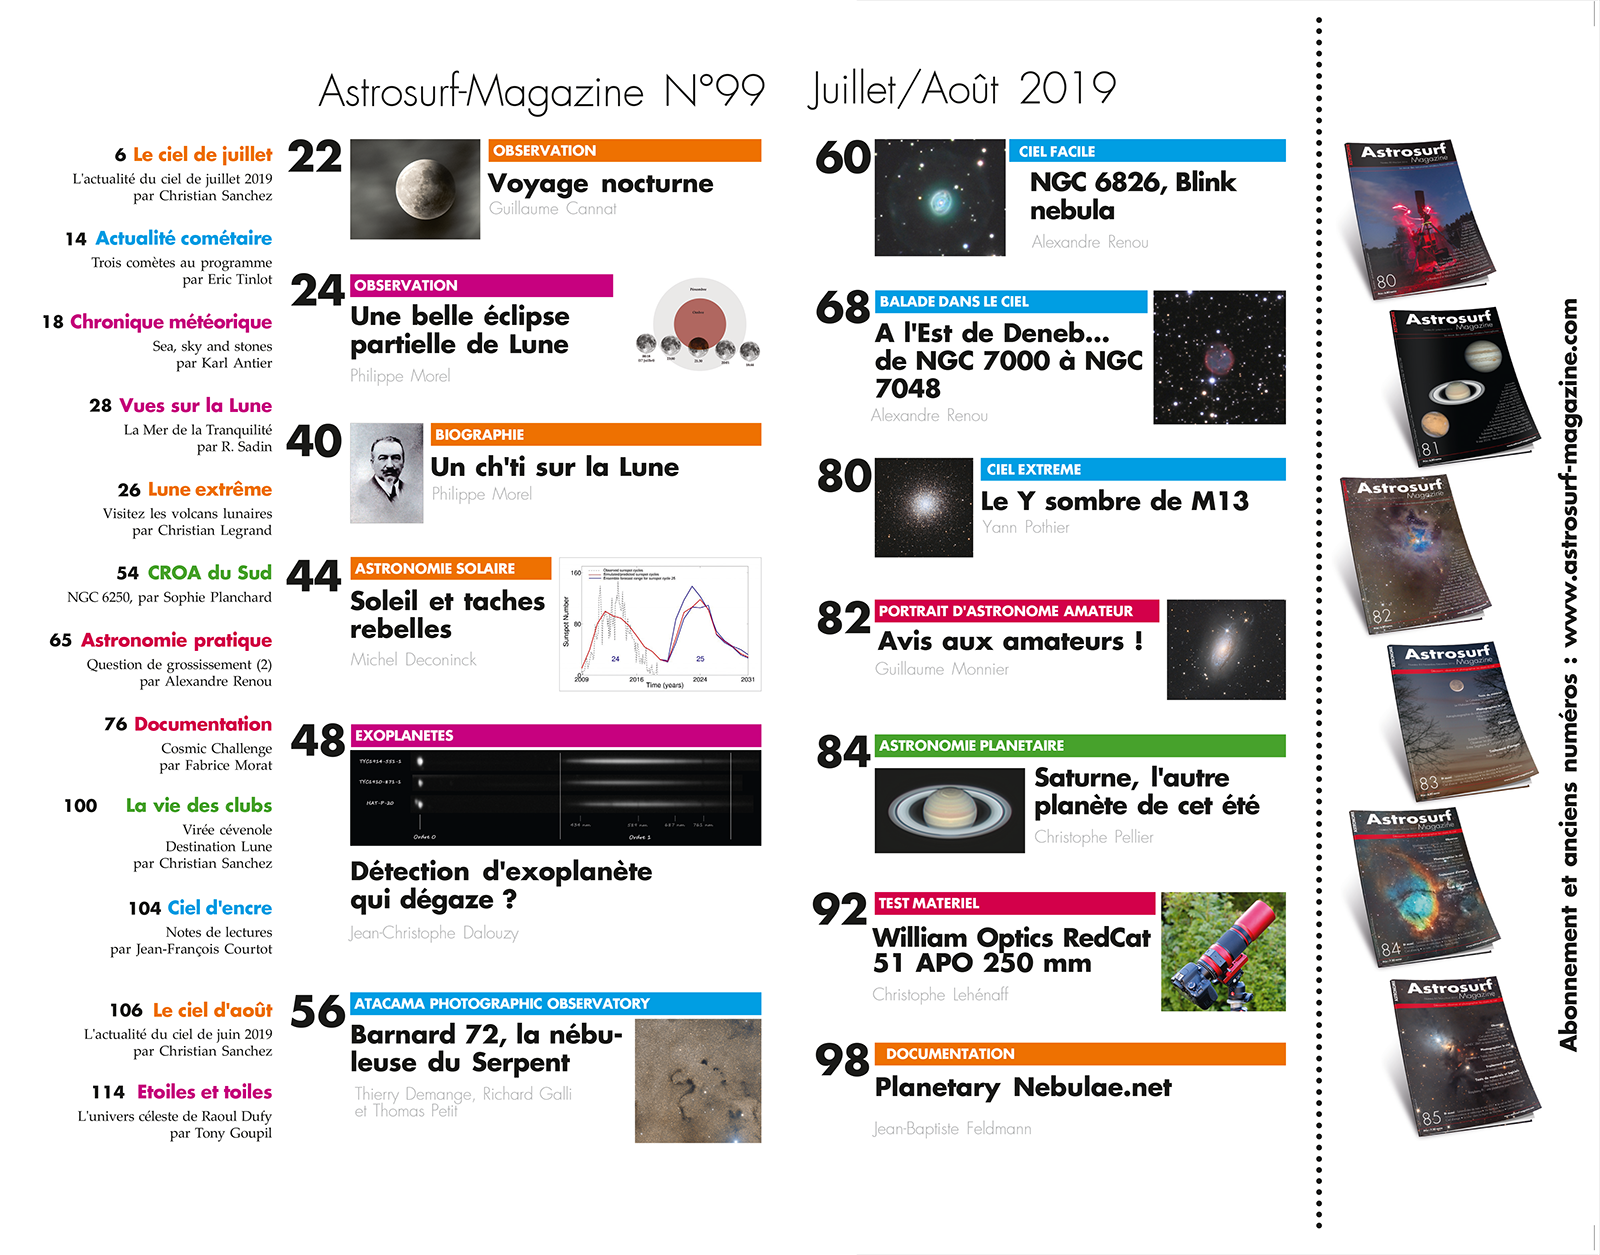 Astrosurf-Magazine N°99